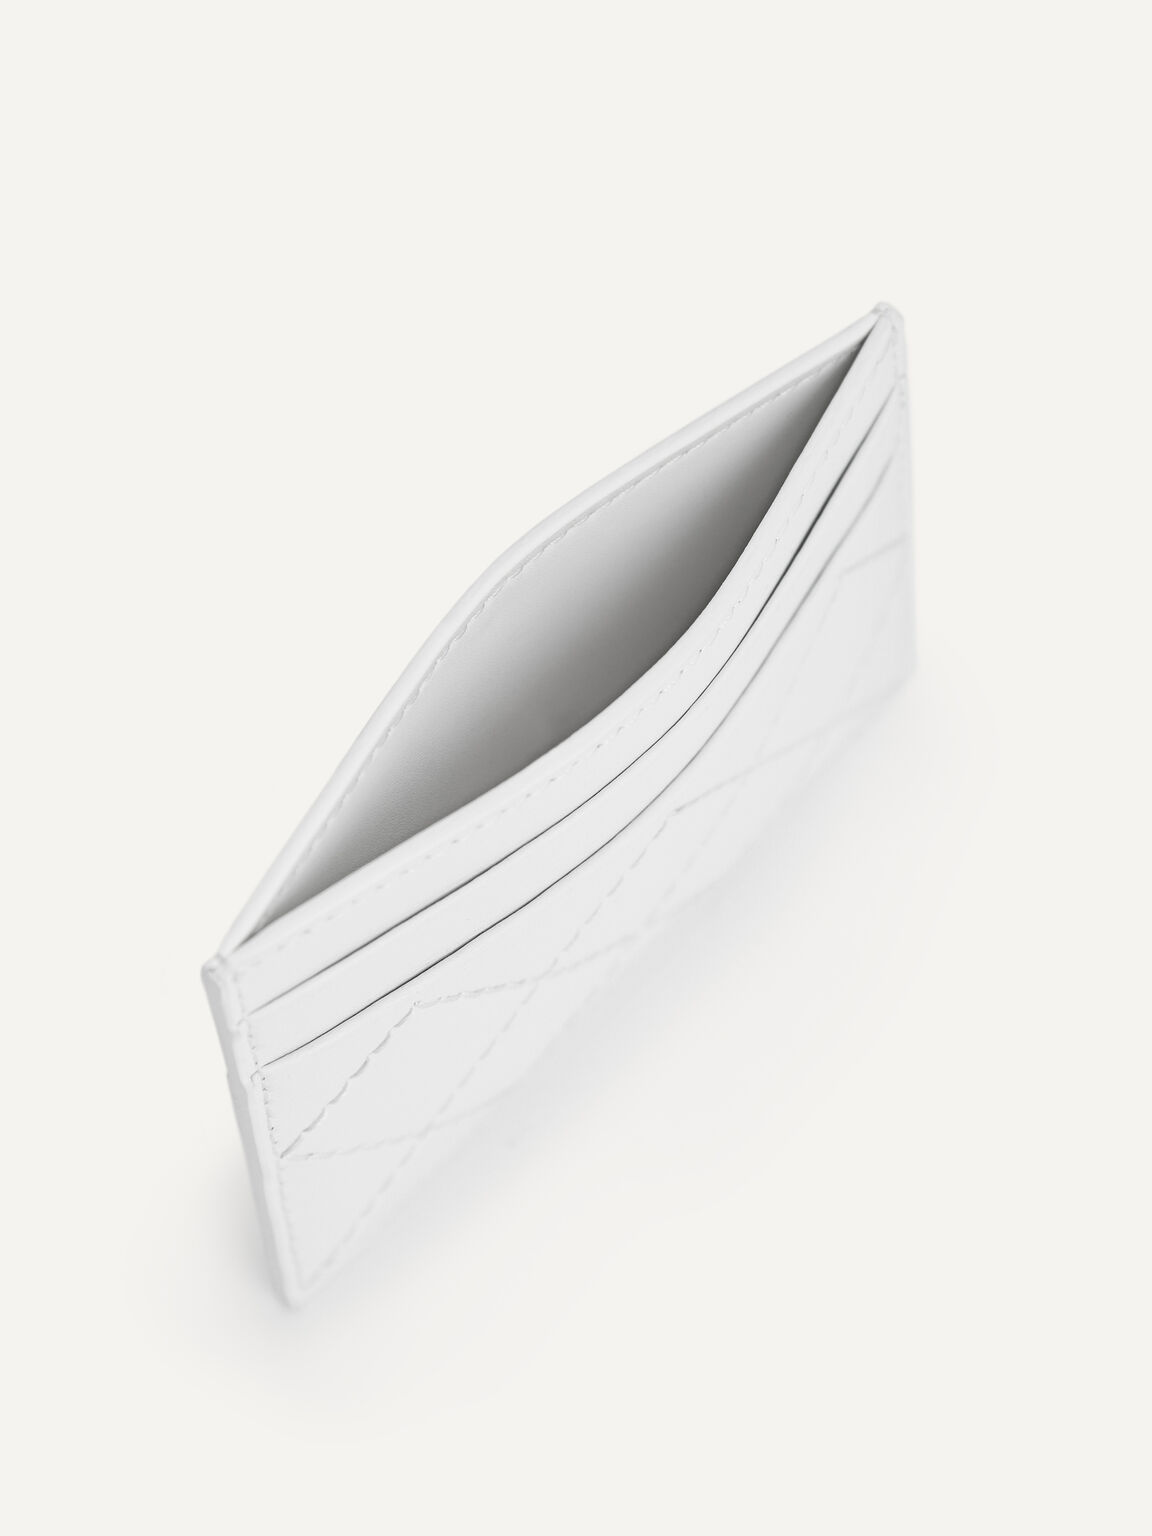 Criss-Cross Pattern Leather Cardholder, White